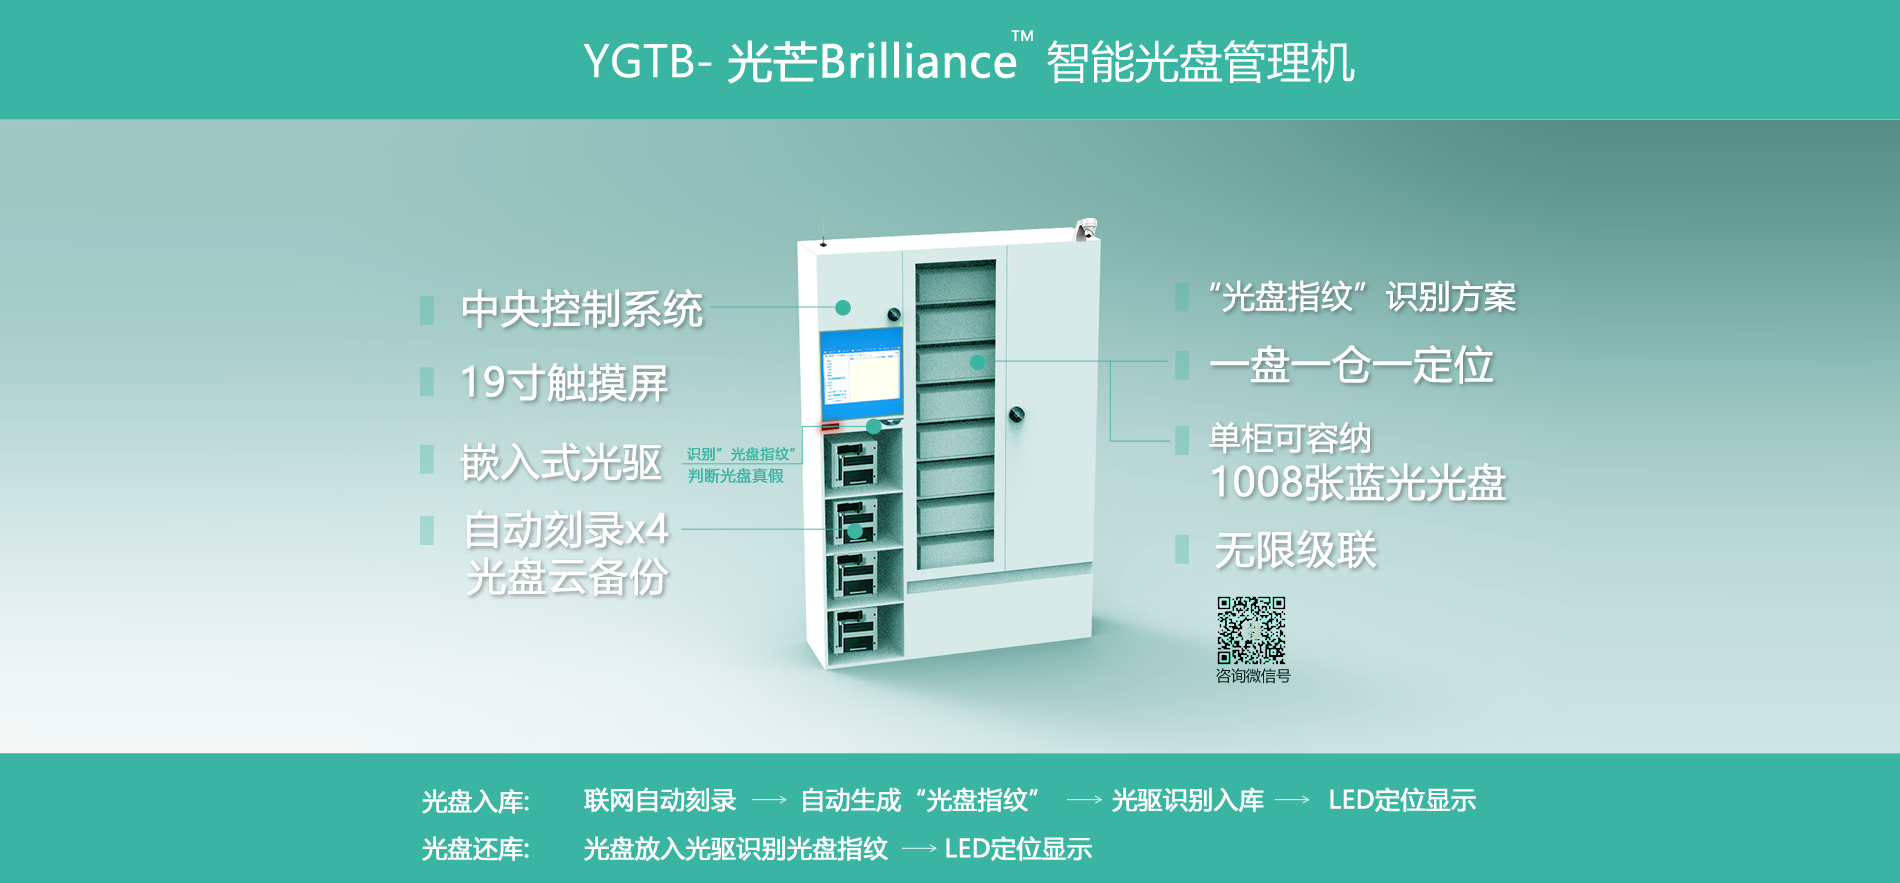 YGTB- 光芒Brilliance(TM)智能光盘管理机